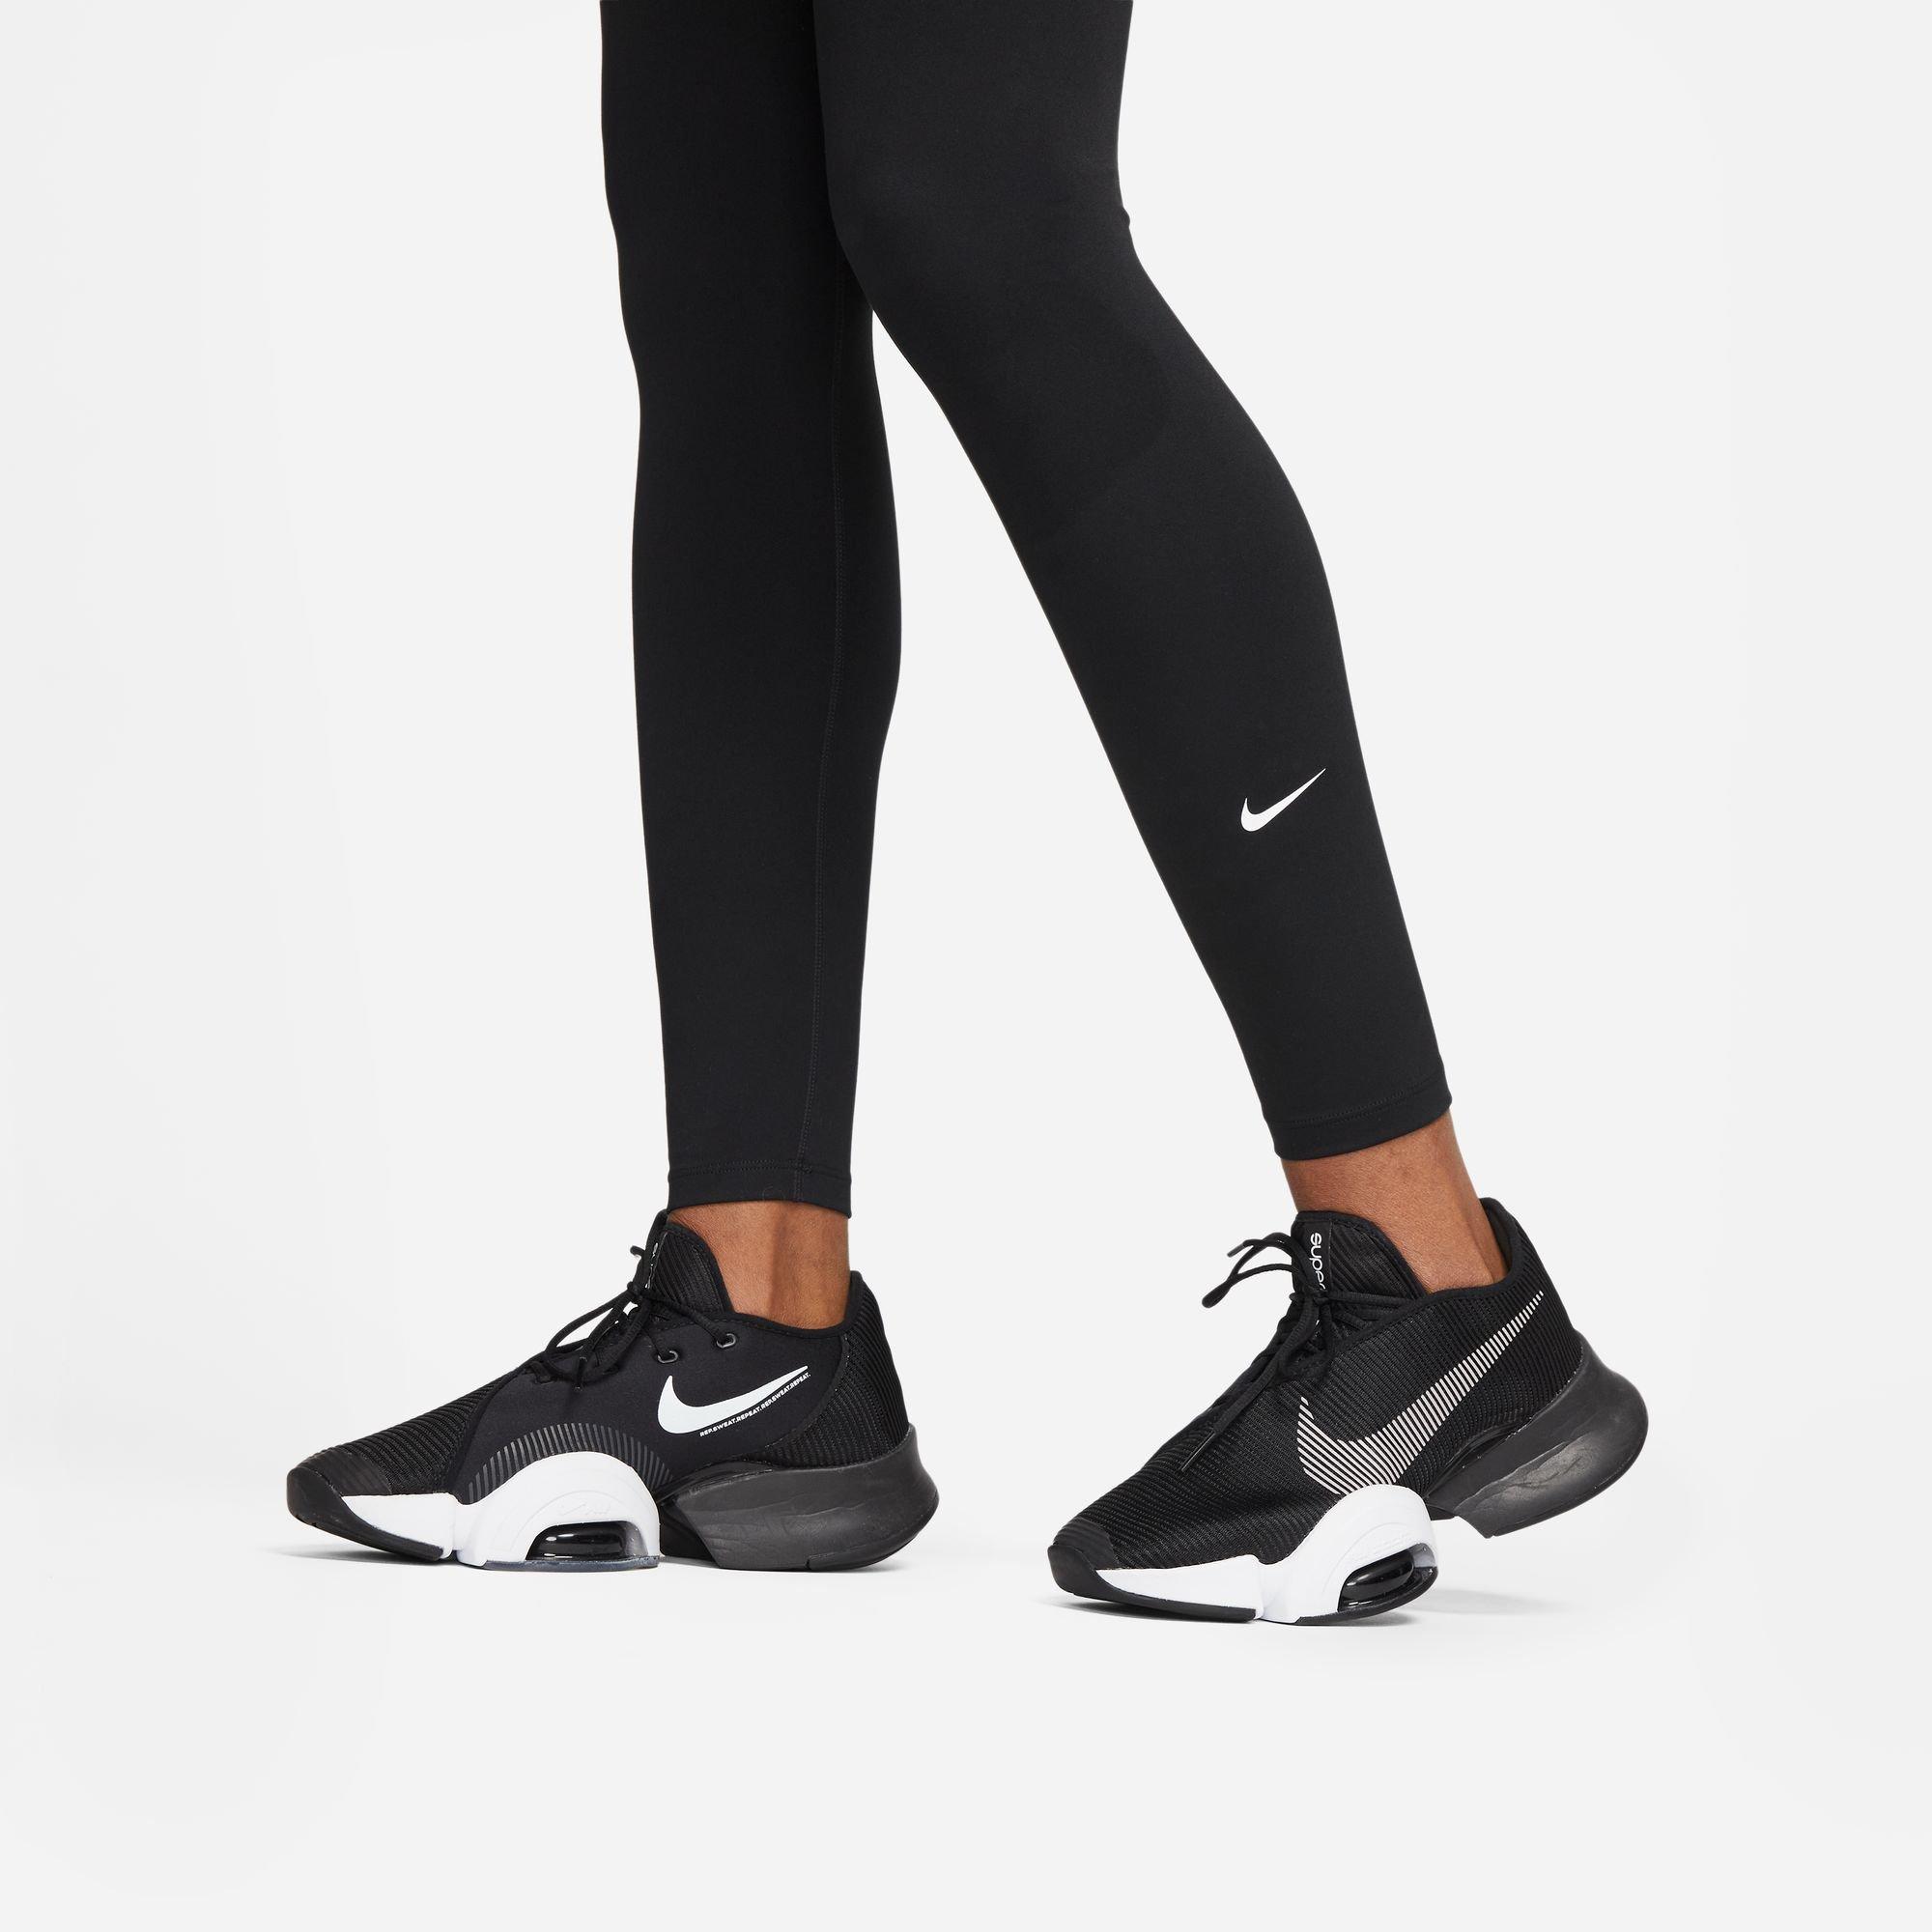 Women's One Dri-Fit High Rise Leggings from Nike